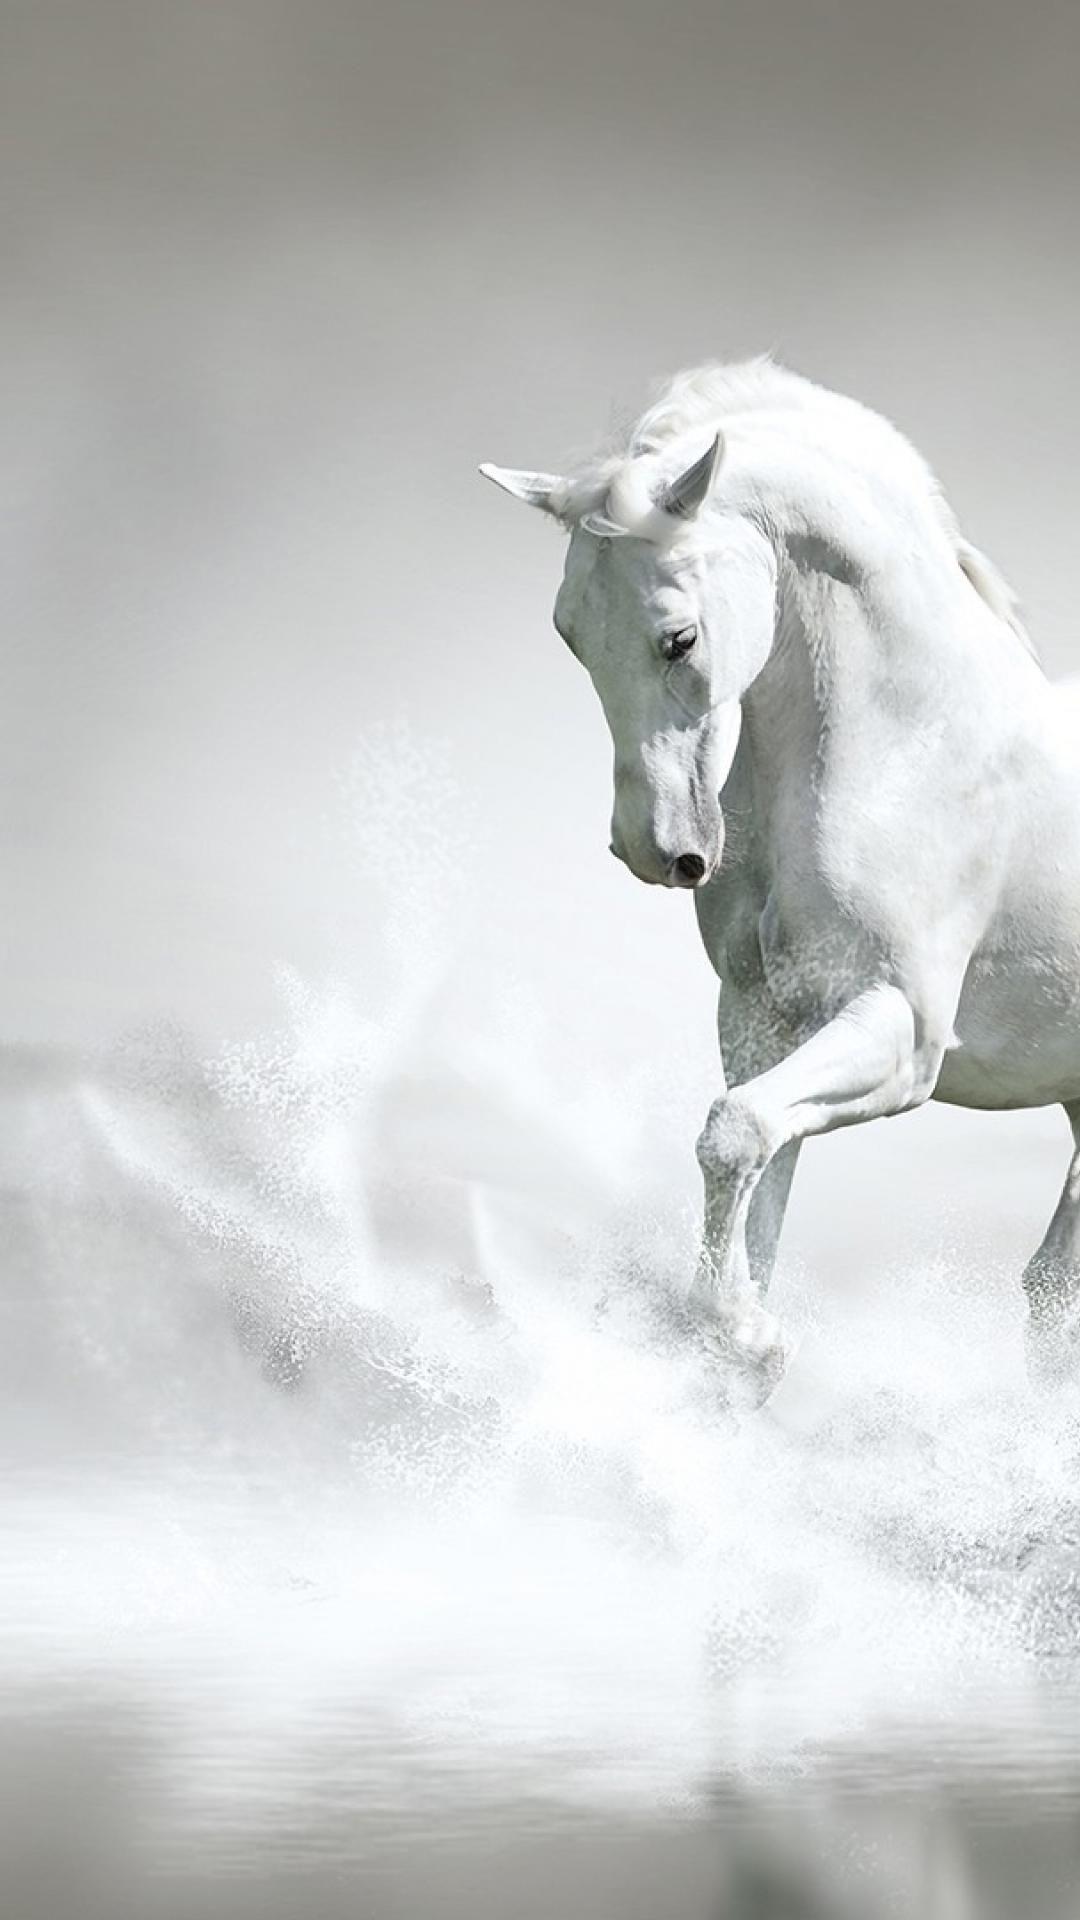 Water running white horse wallpaper